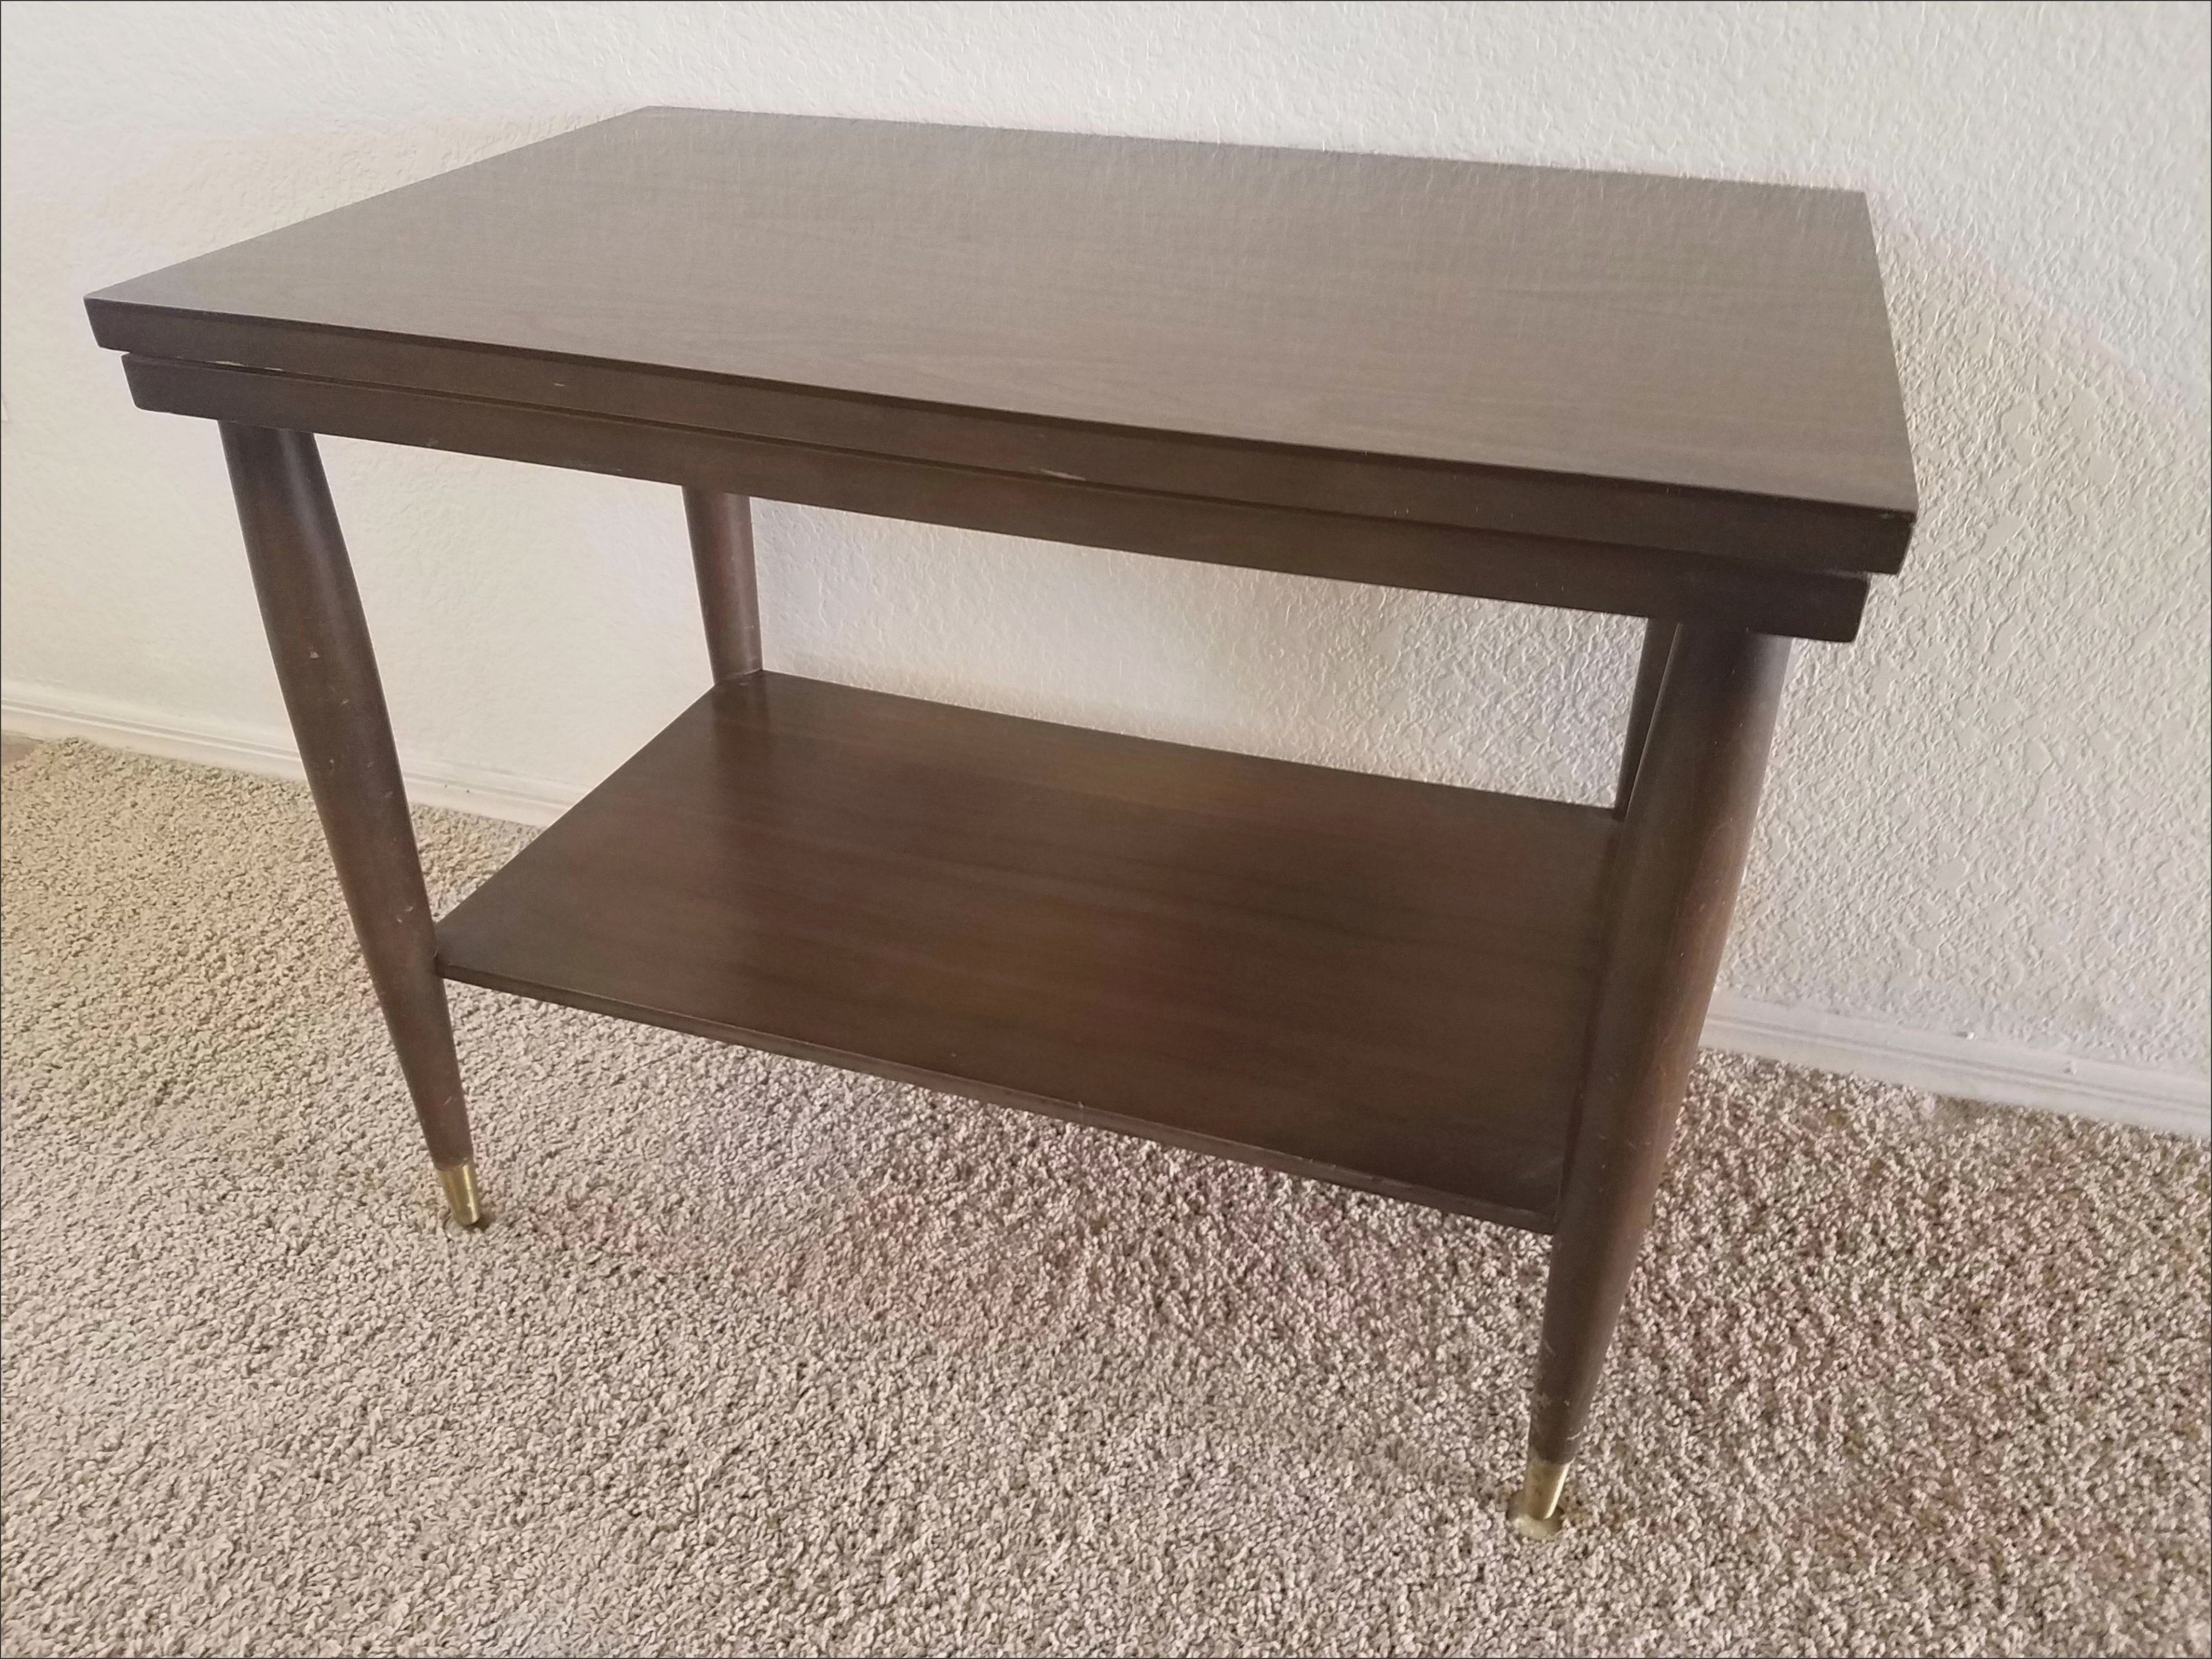 Modular Coffee Table Fresh Modular Desk Tops Unique New Diy Sofa Throughout Newest Modular Coffee Tables (Gallery 16 of 20)